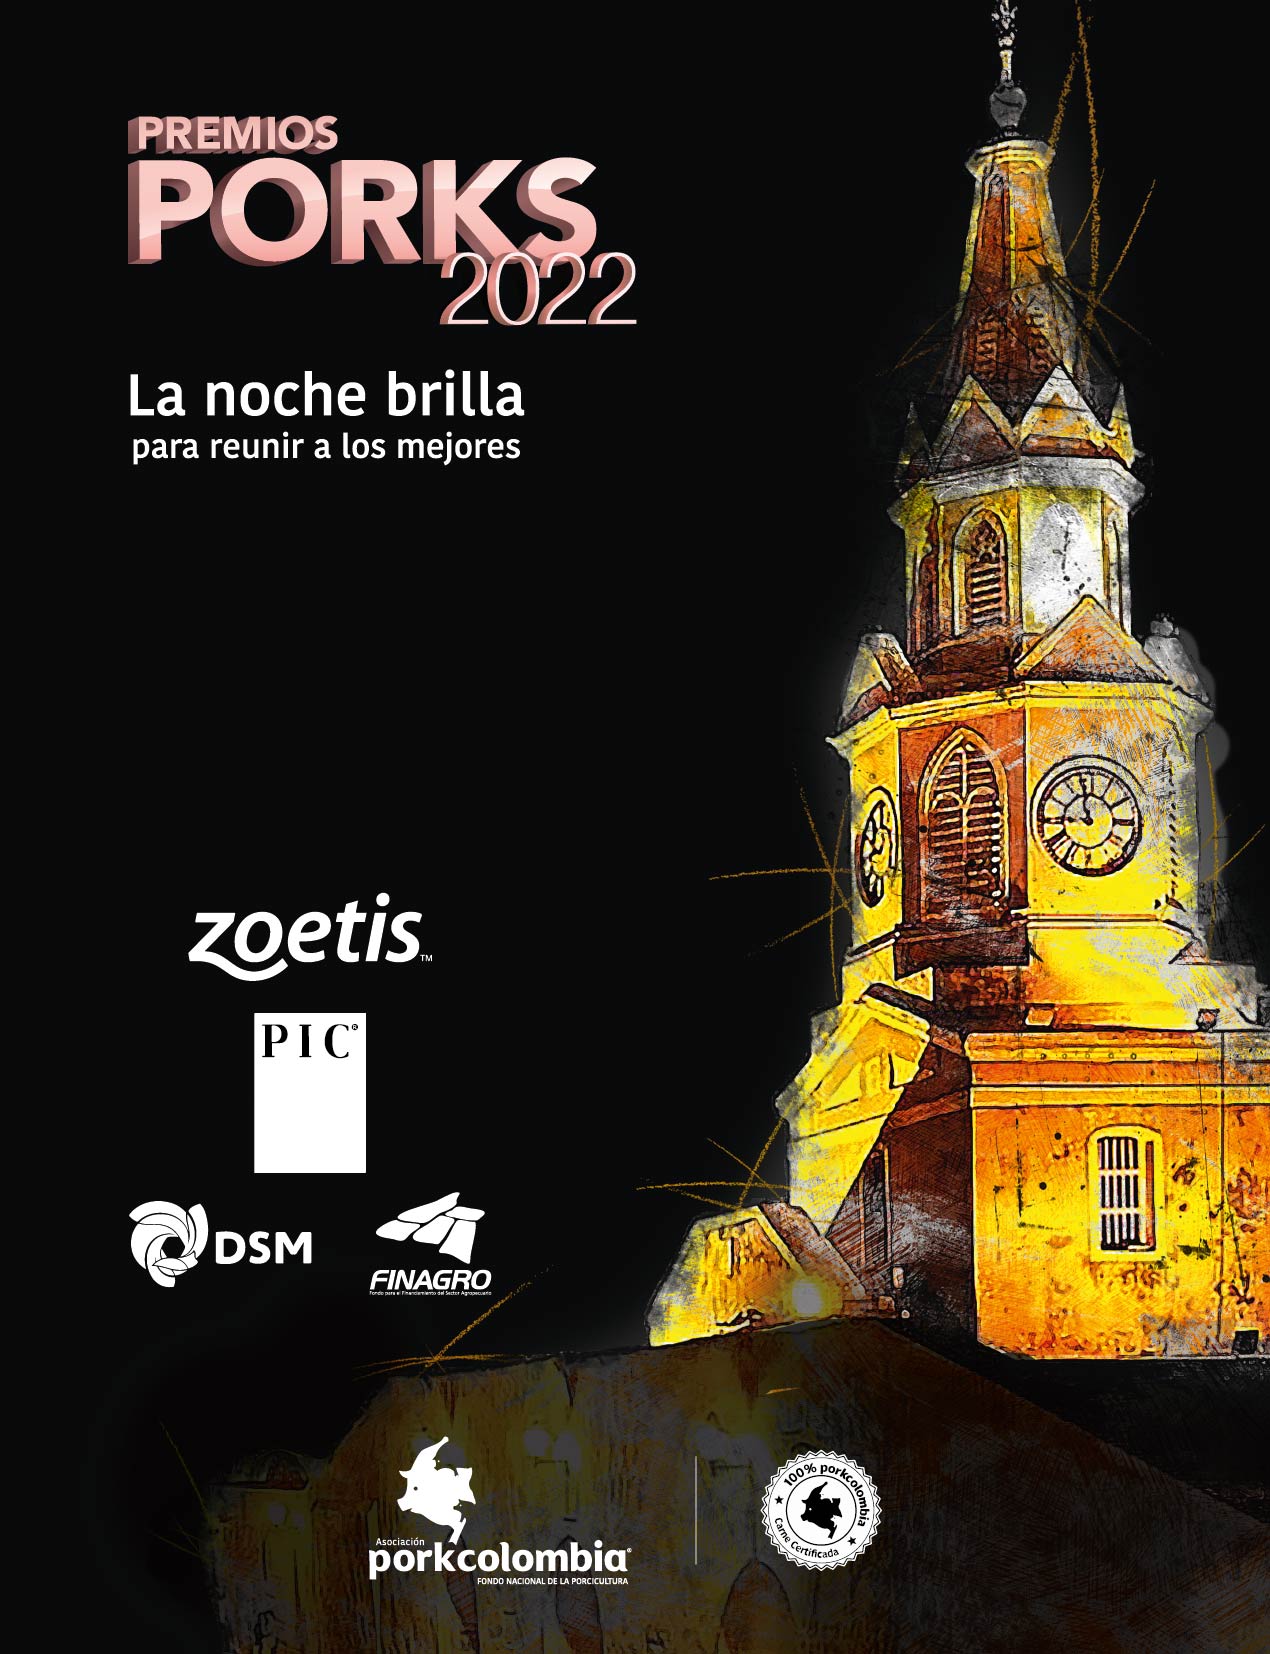 https://transparencia.porkcolombia.co/wp-content/uploads/2022/07/AF-Aviso-Premios-Porks_Torredelreloj-1.jpg